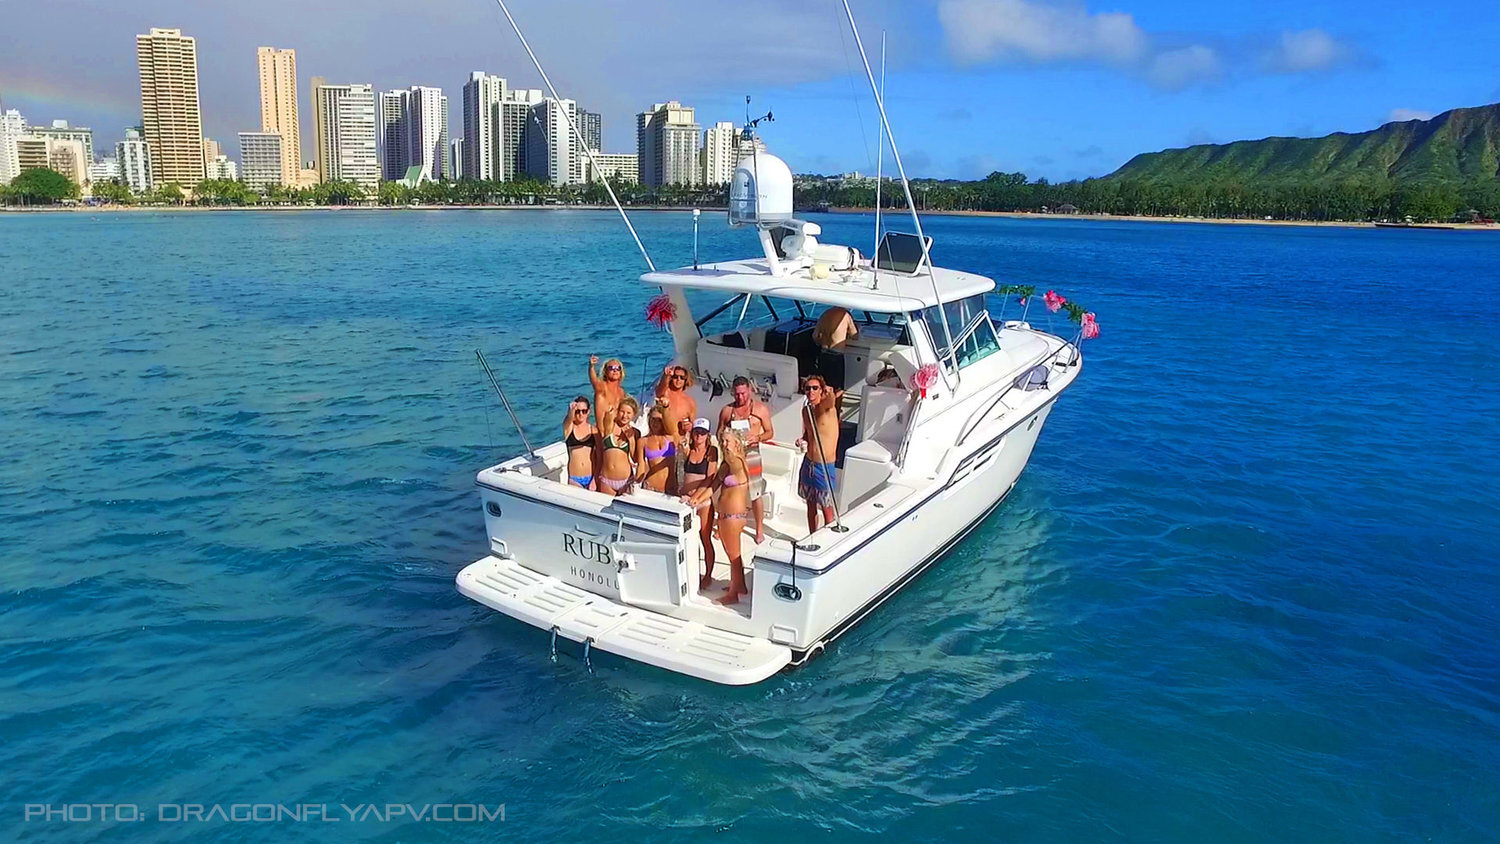 sailing-yacht-oahu-hawaii-maui-charter-boat-private-luxury-rent-stern-group.jpg